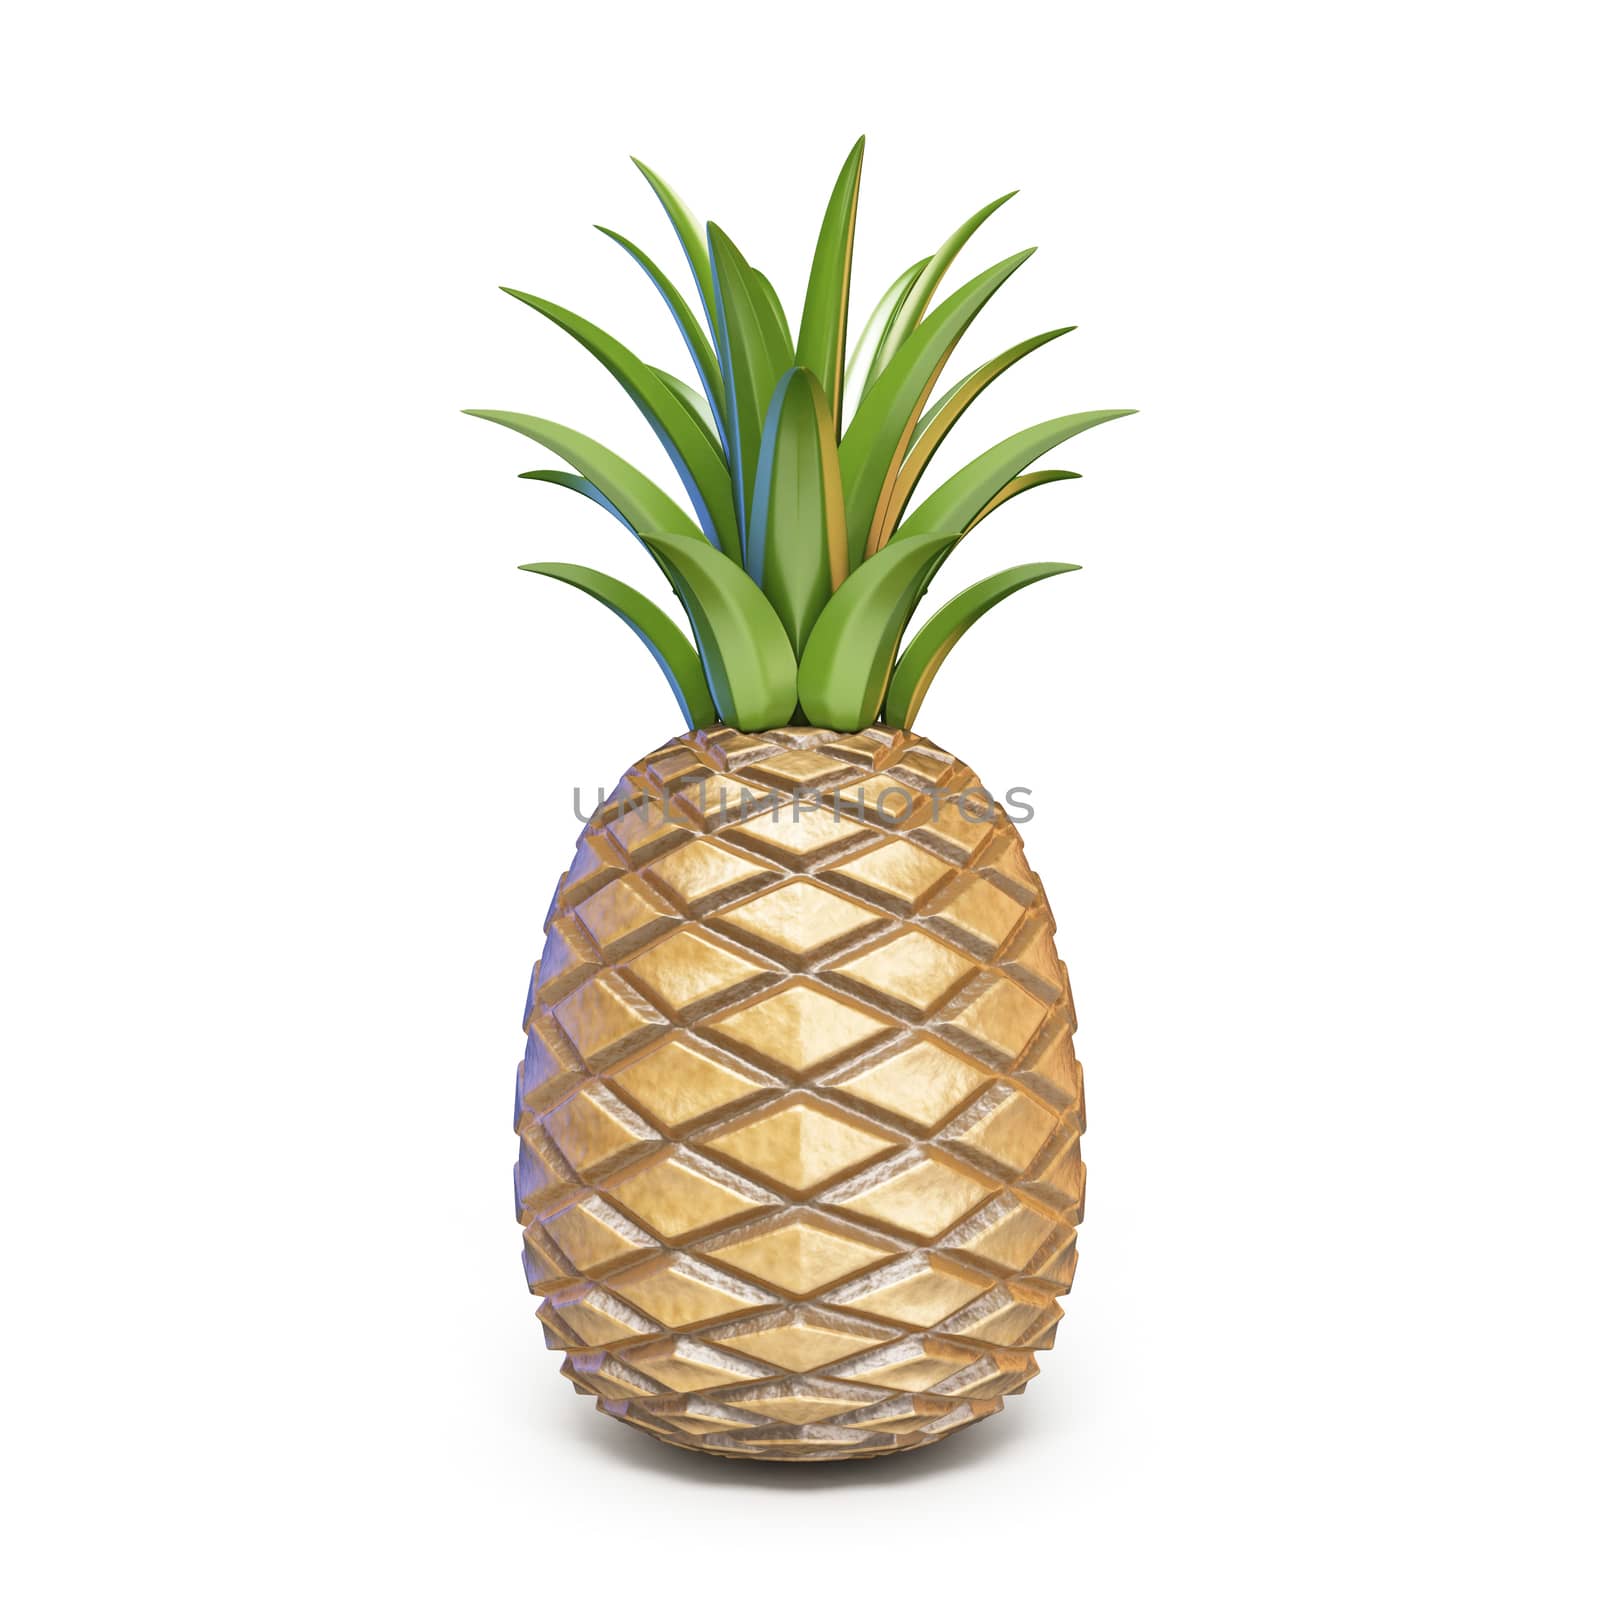 Pineapple 3D rendering illustration isolated on white background